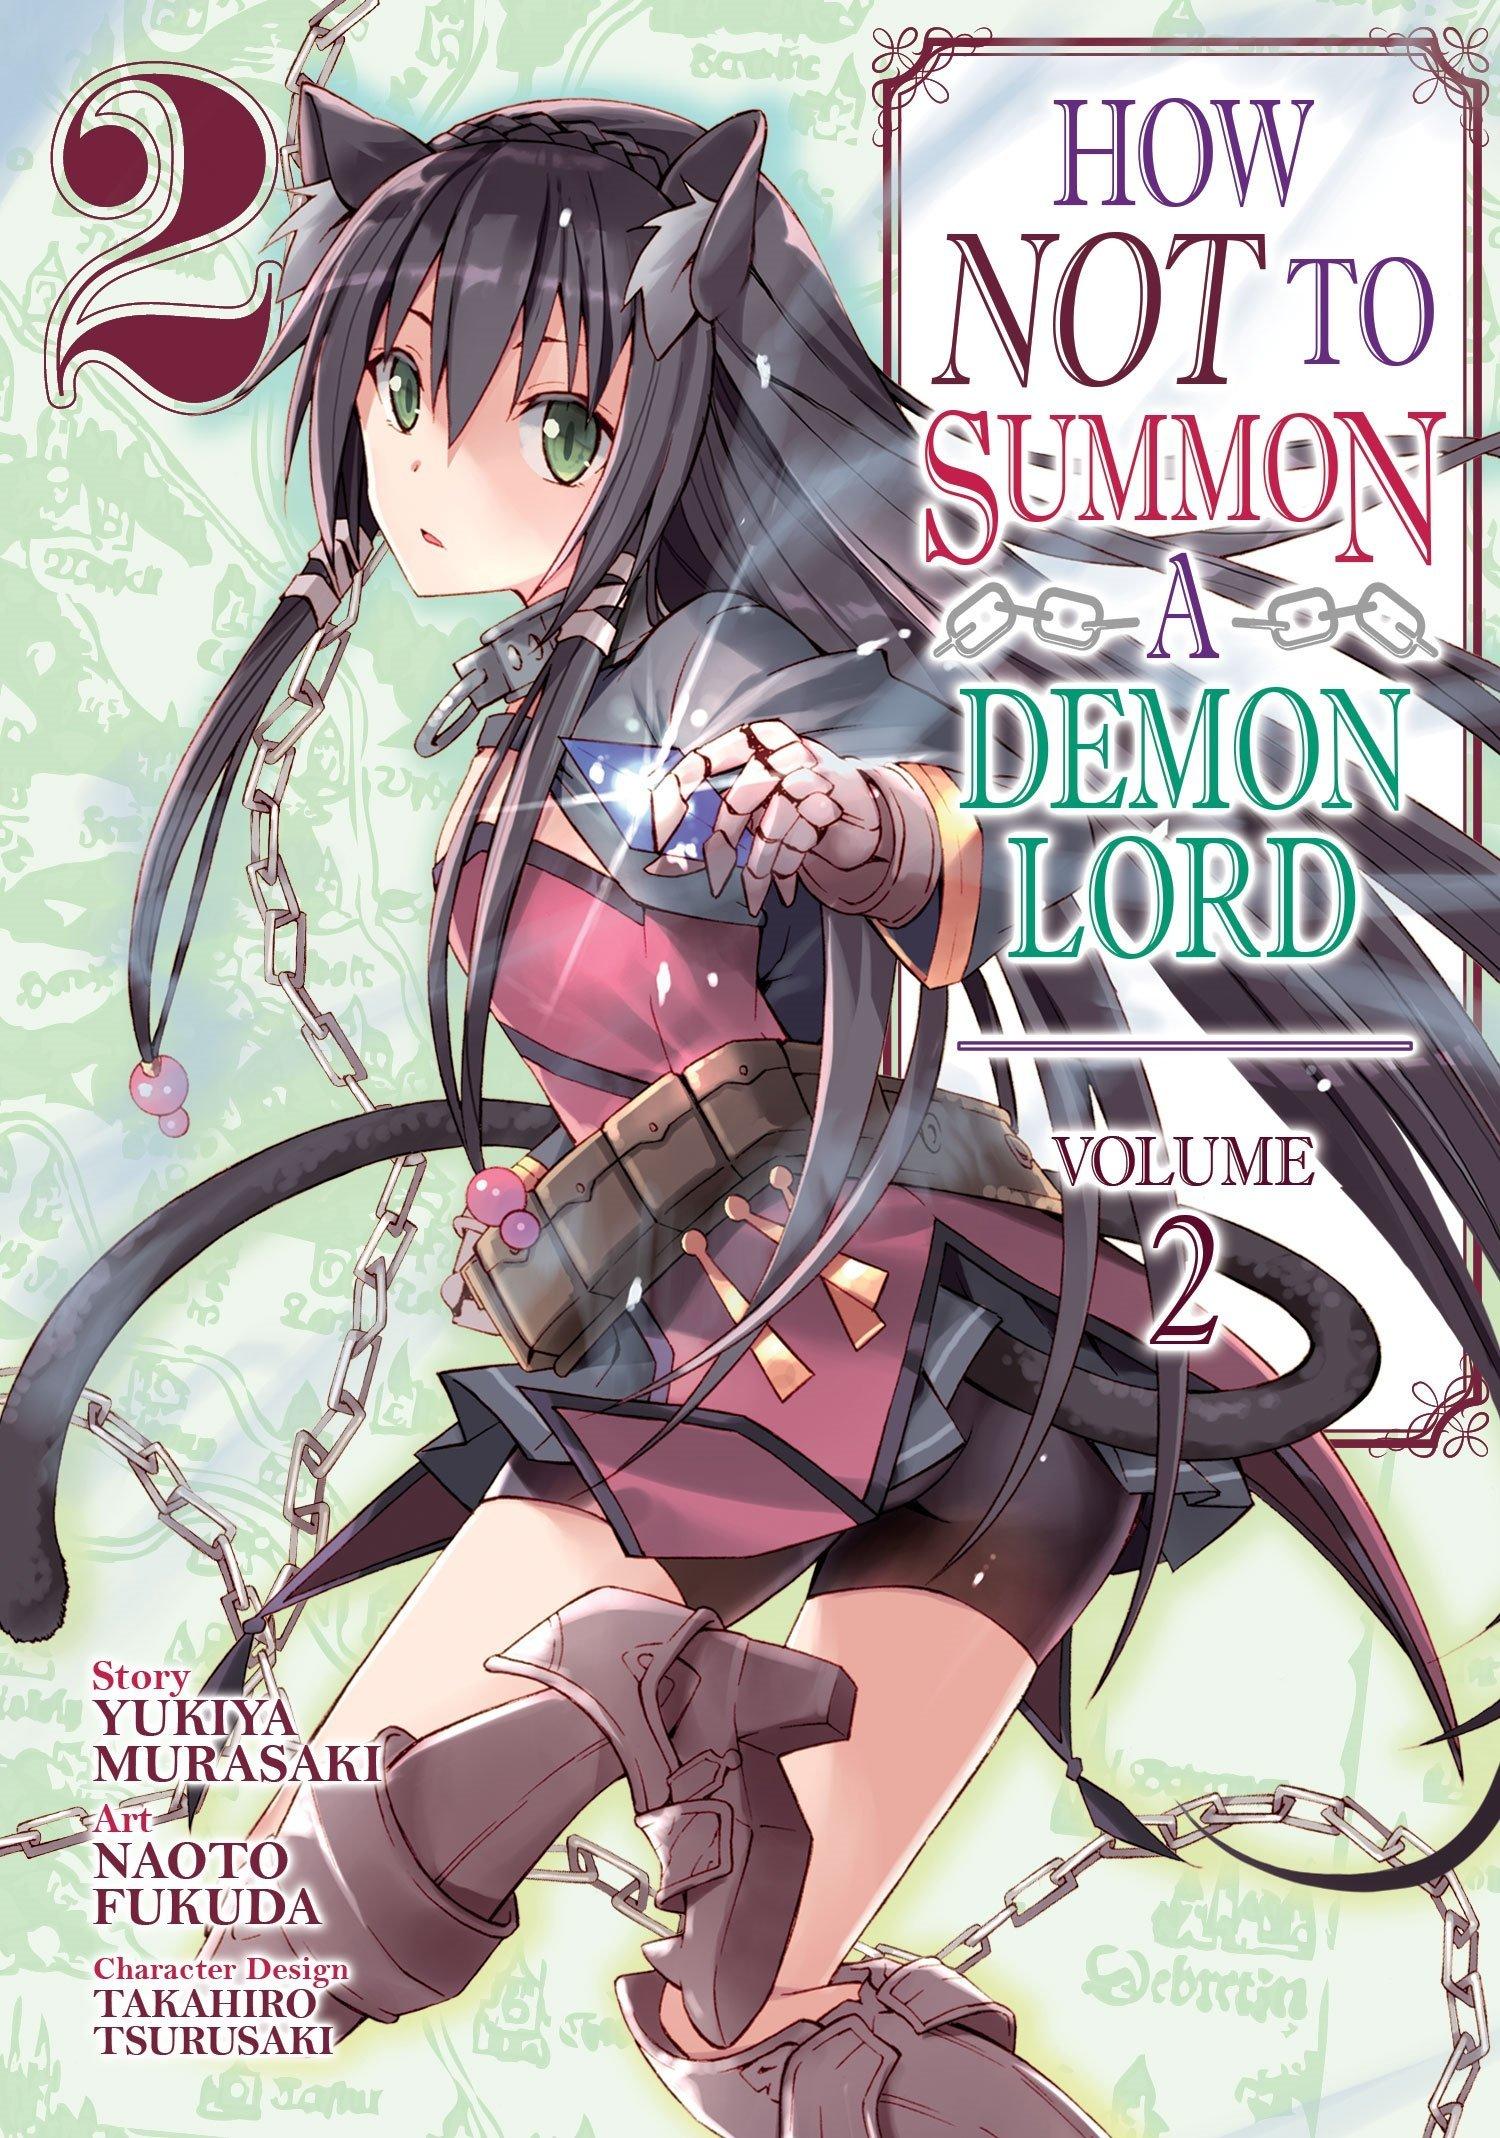 How NOT to Summon a Demon Lord Vol. 2: Amazon.co.uk: Yukiya Murasaki